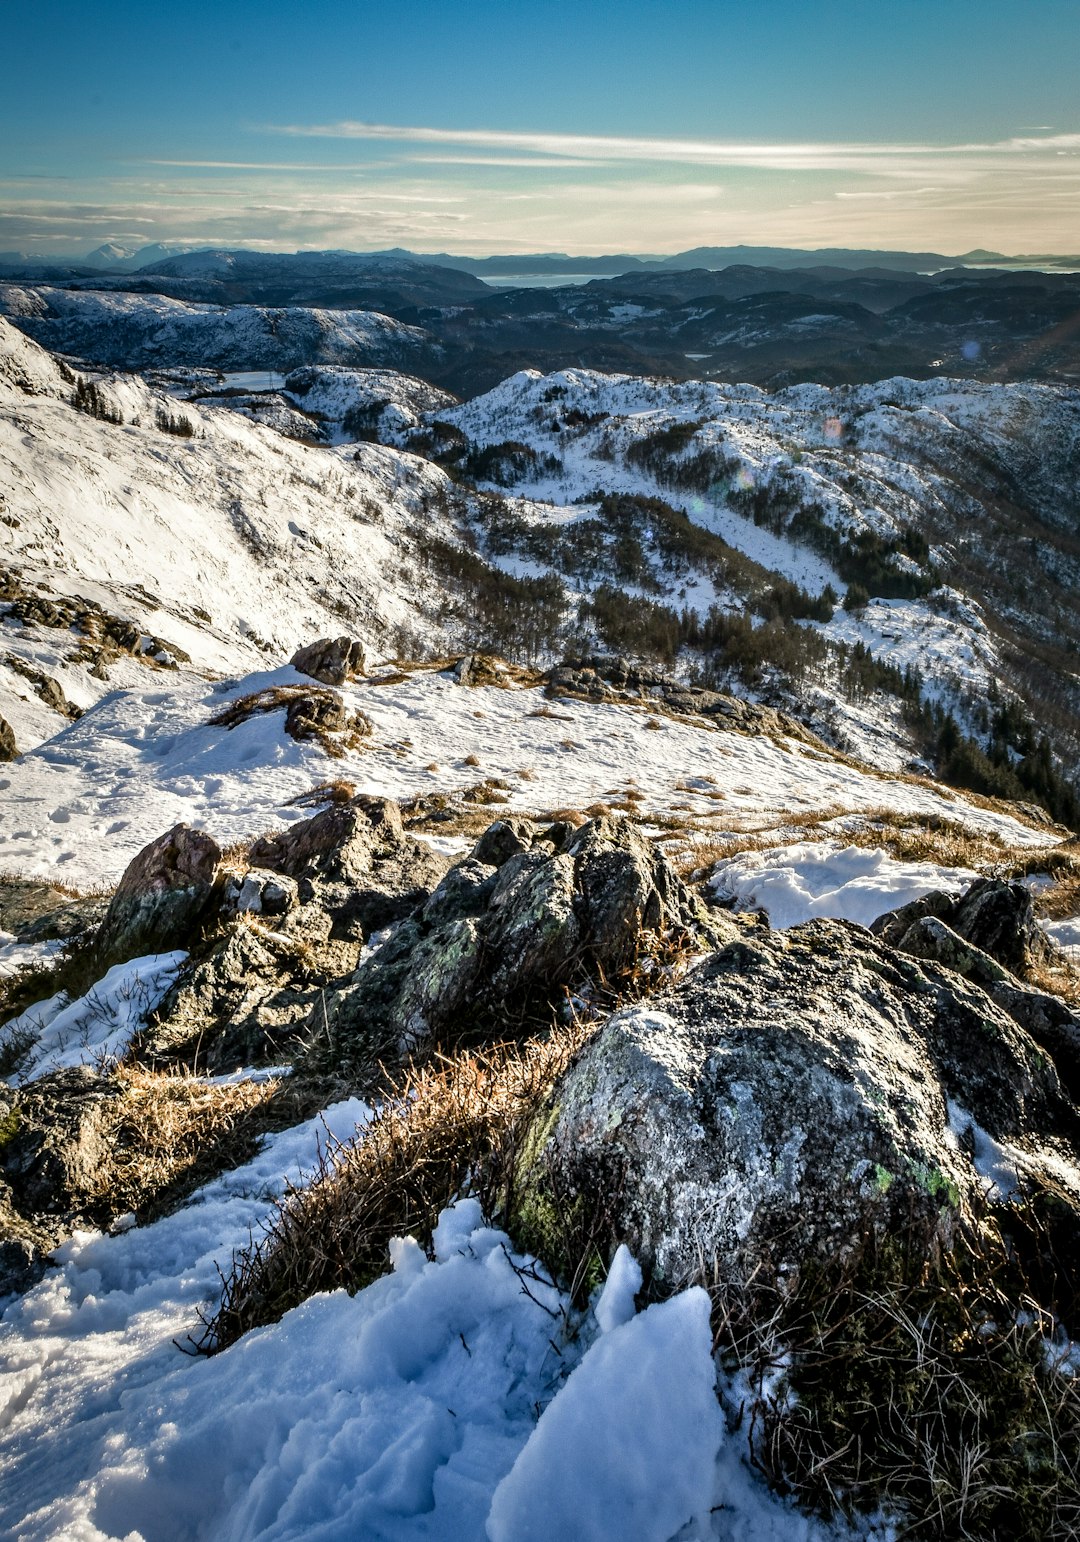 Travel Tips and Stories of Ulriken in Norway